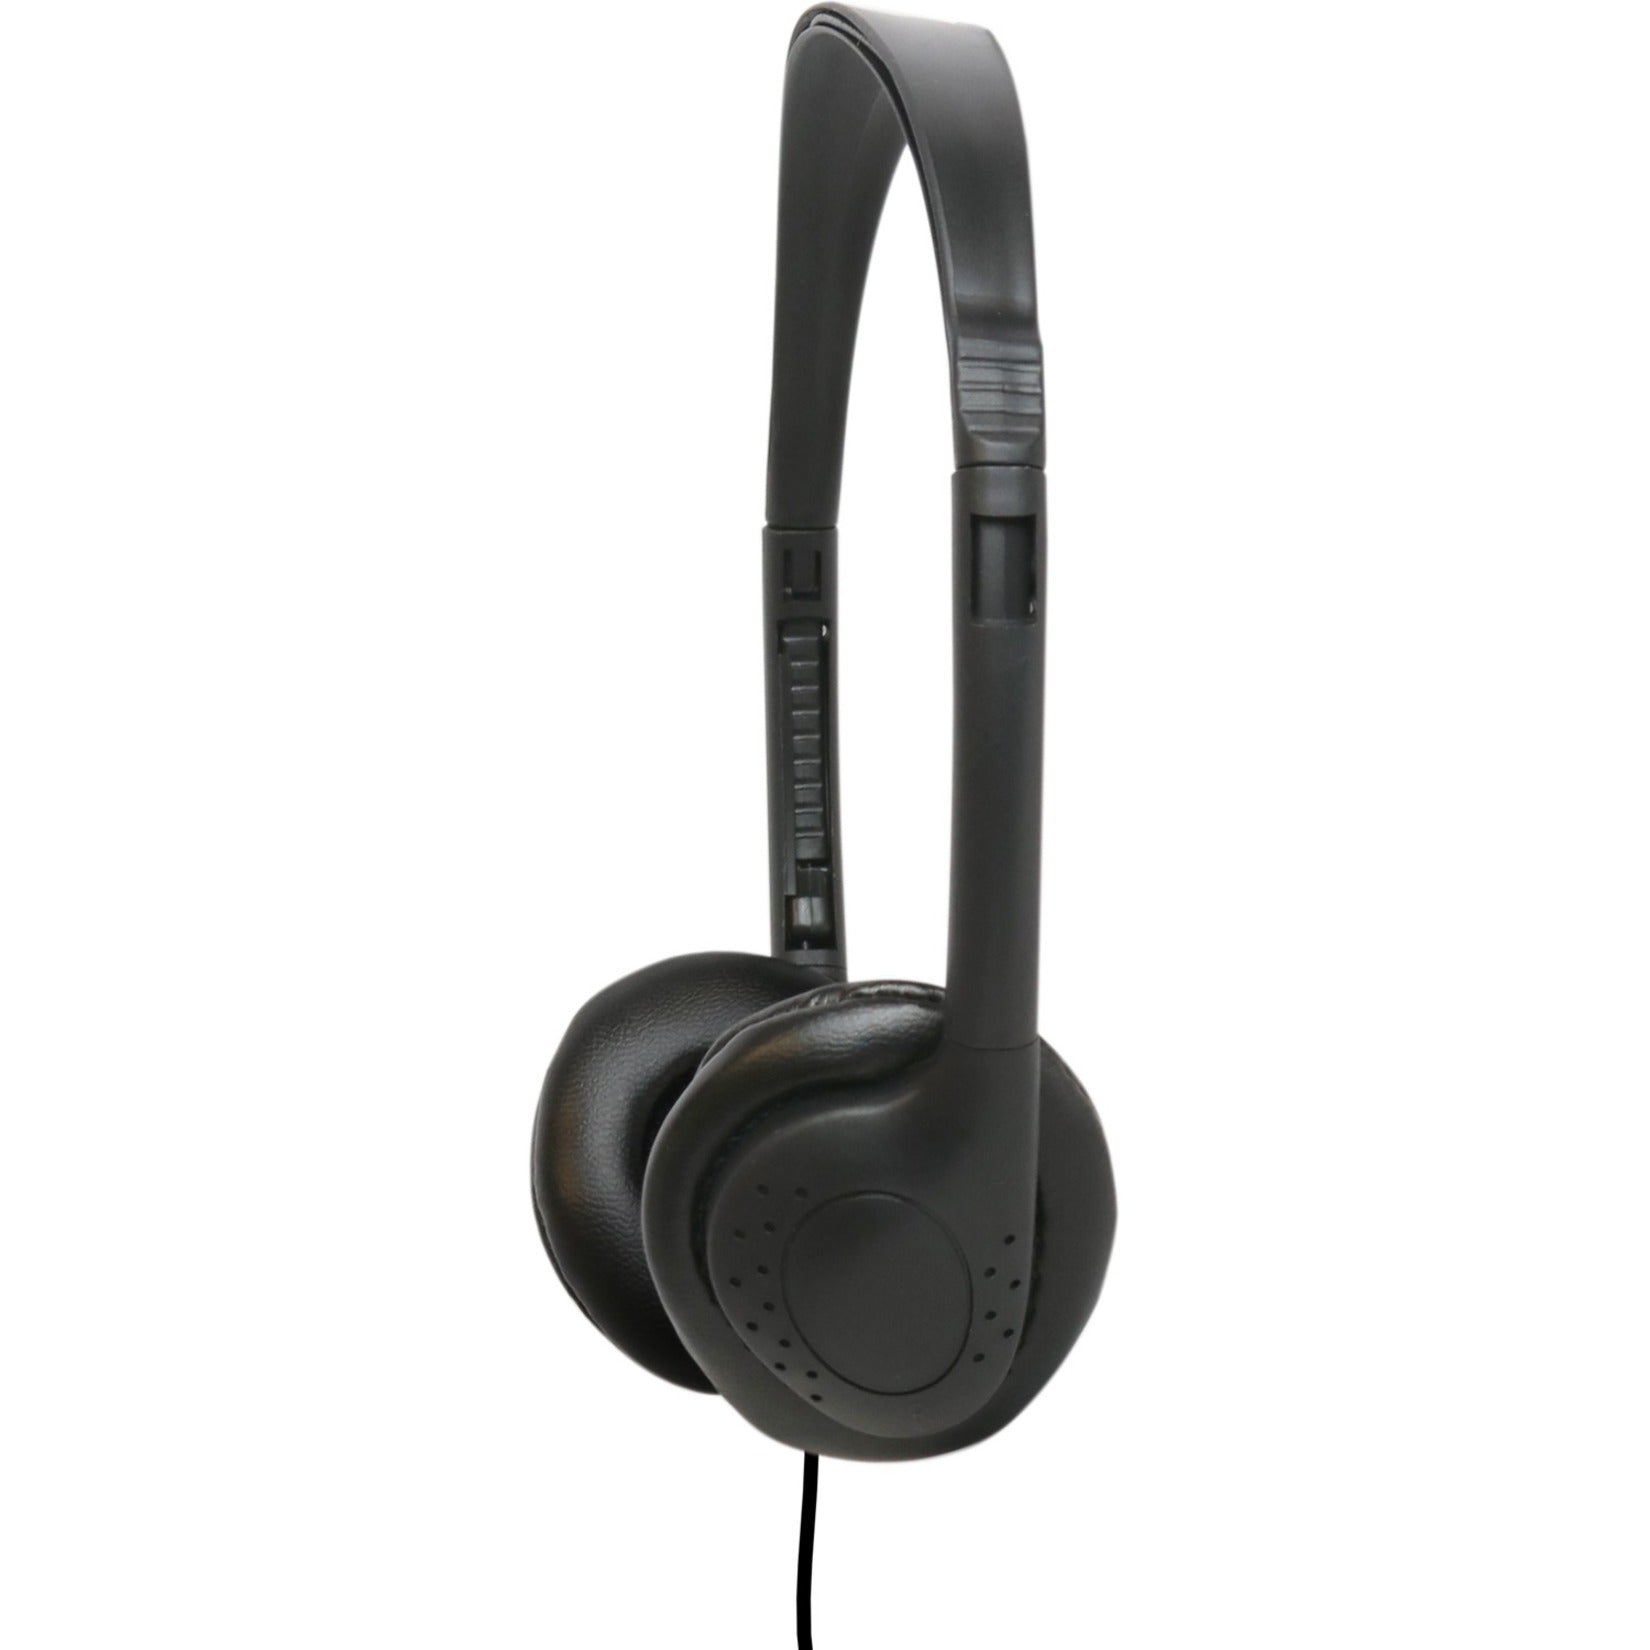 Avid 1AE6-711RSR-M32VNL AE-711V Stereo Headphone Vinyl Ear Pads with 3.5mm Plug, Over-the-head, 1 Year Warranty